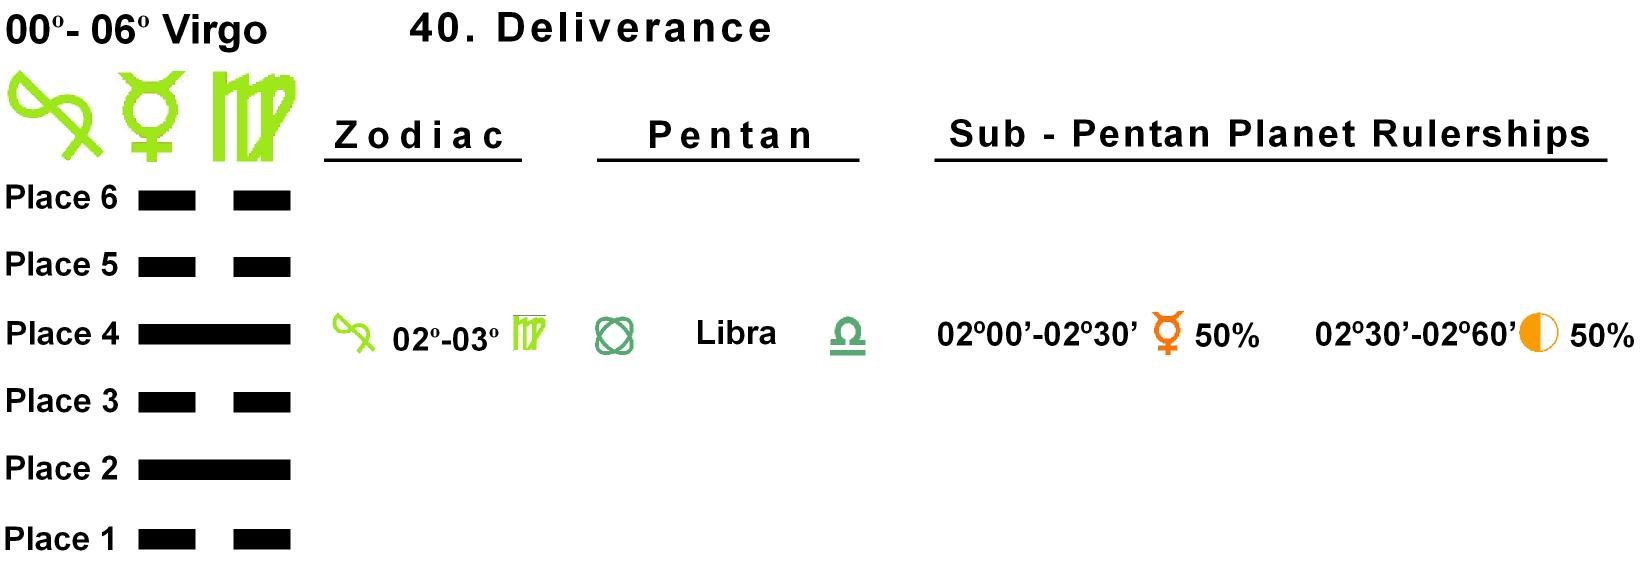 Pent-lines-06VI 02-03 Hx-40 Deliverance